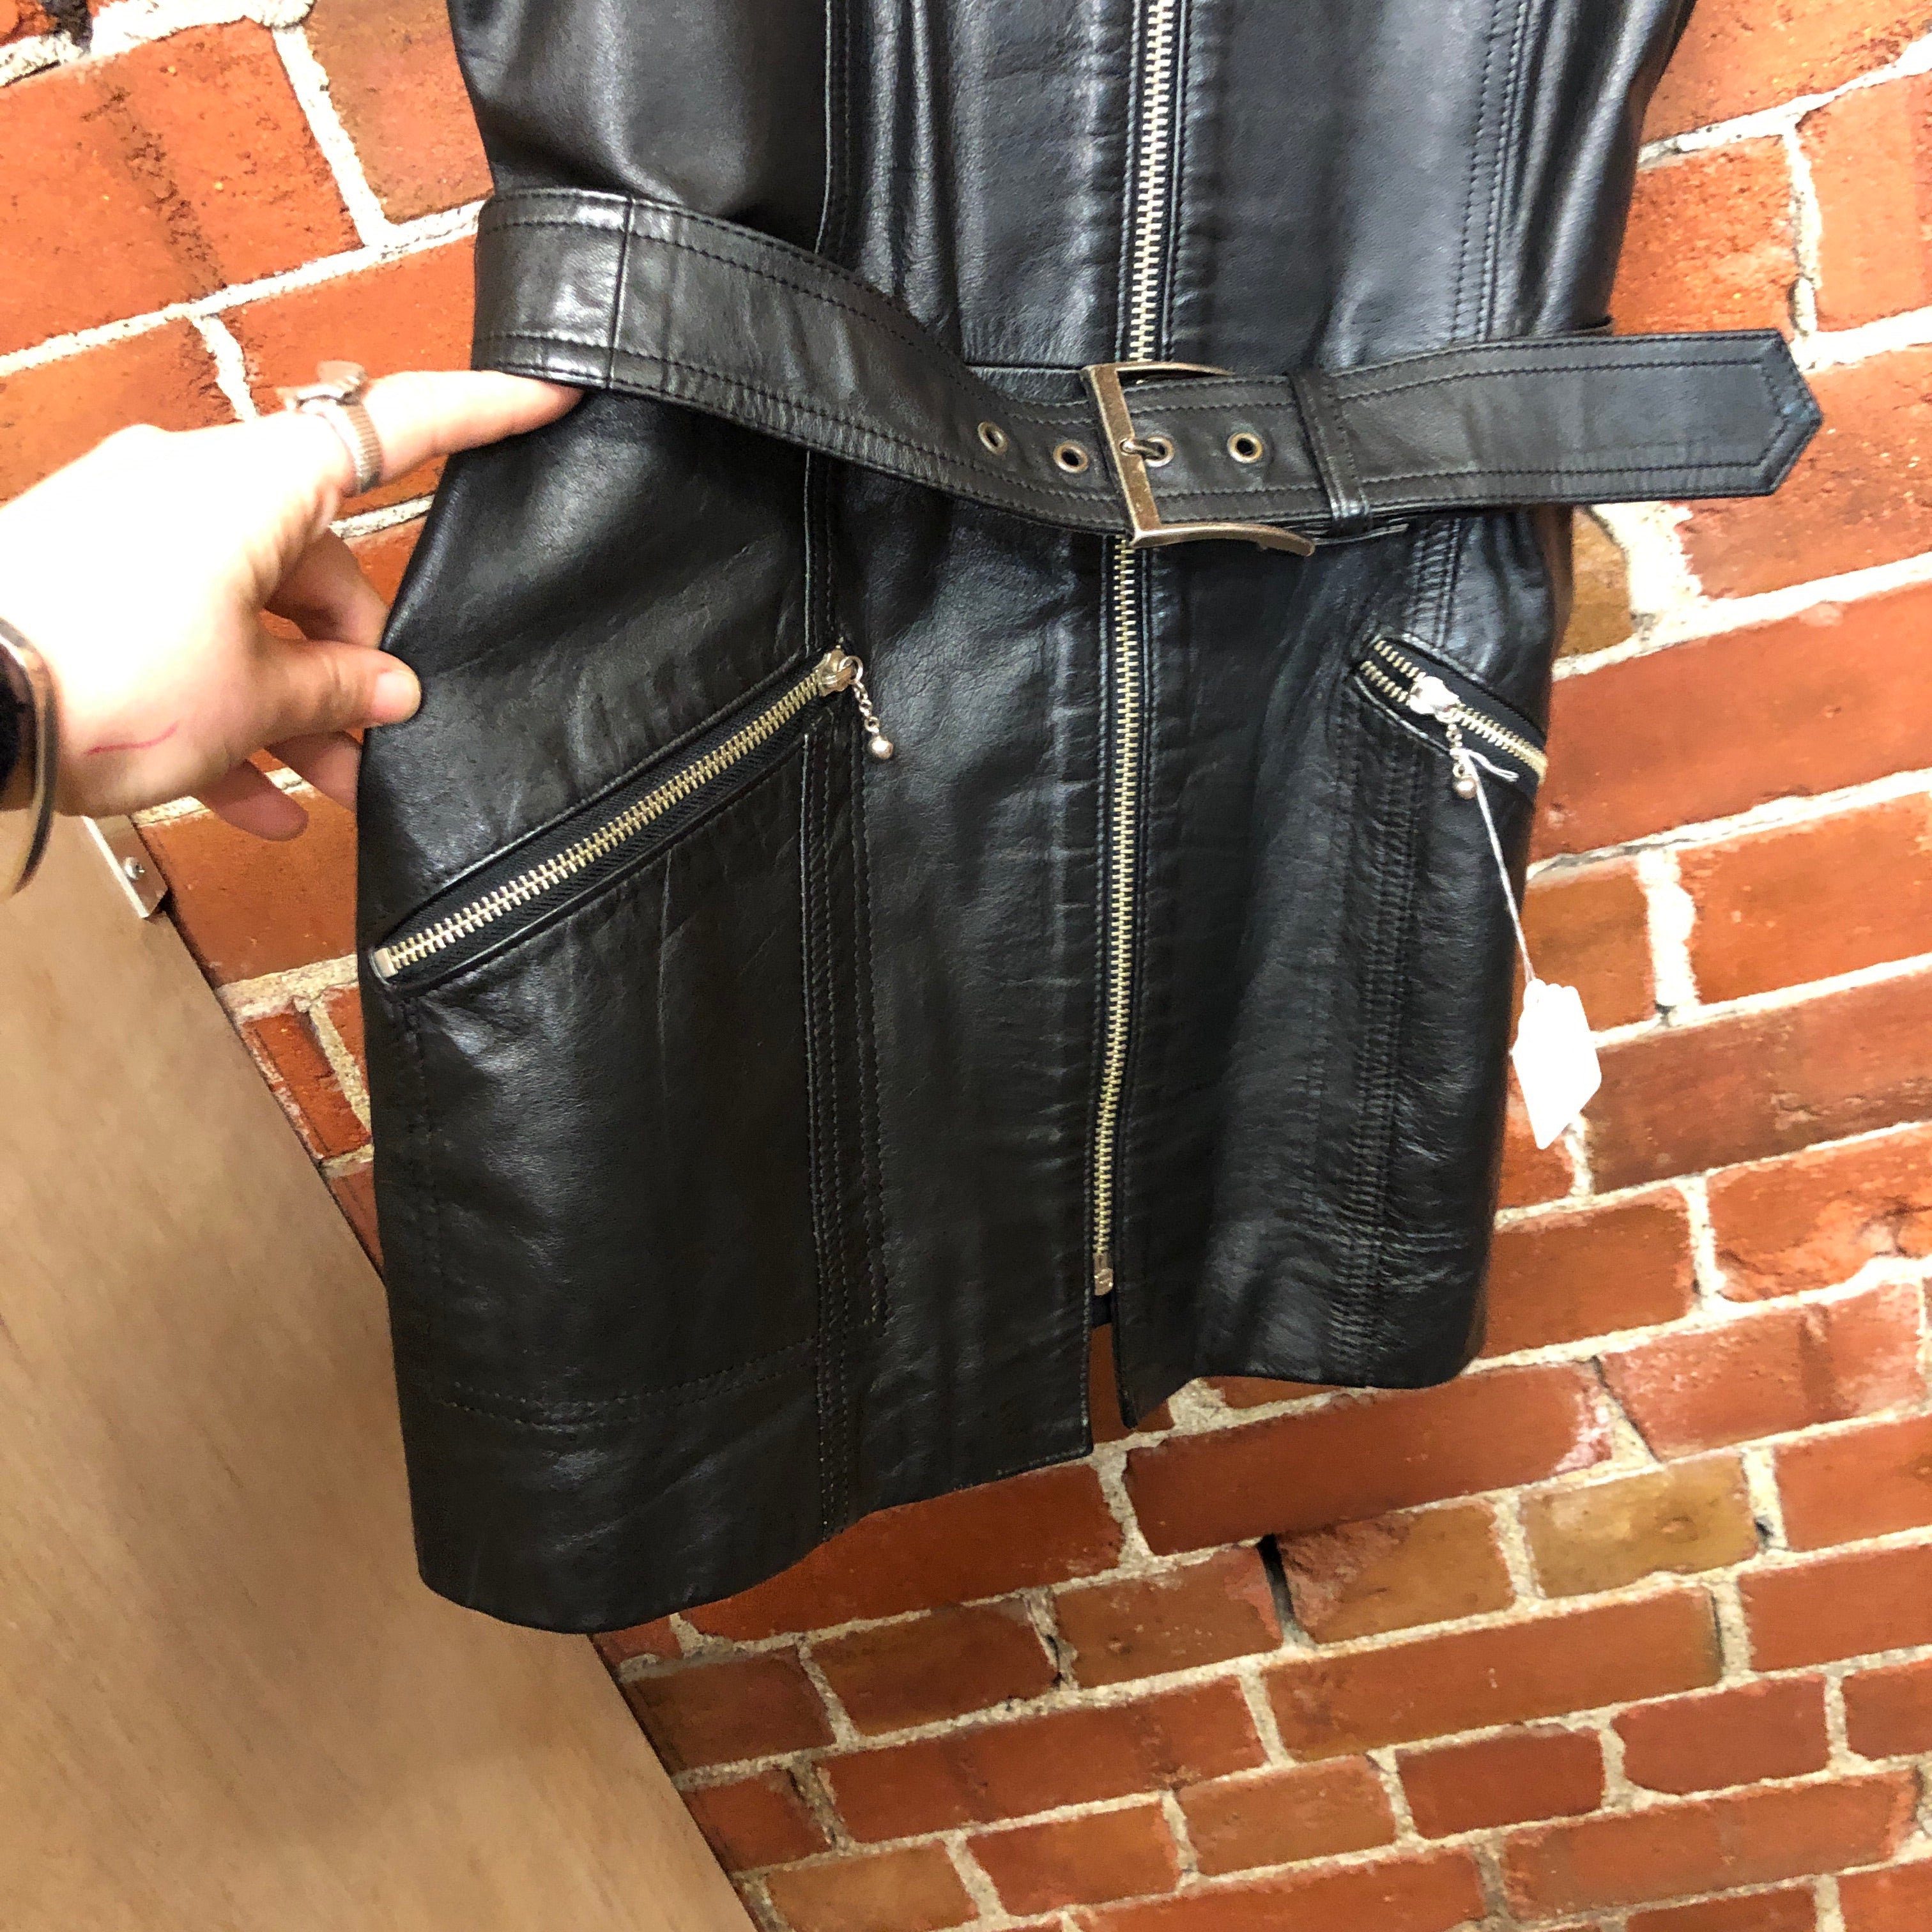 1990s leather vest